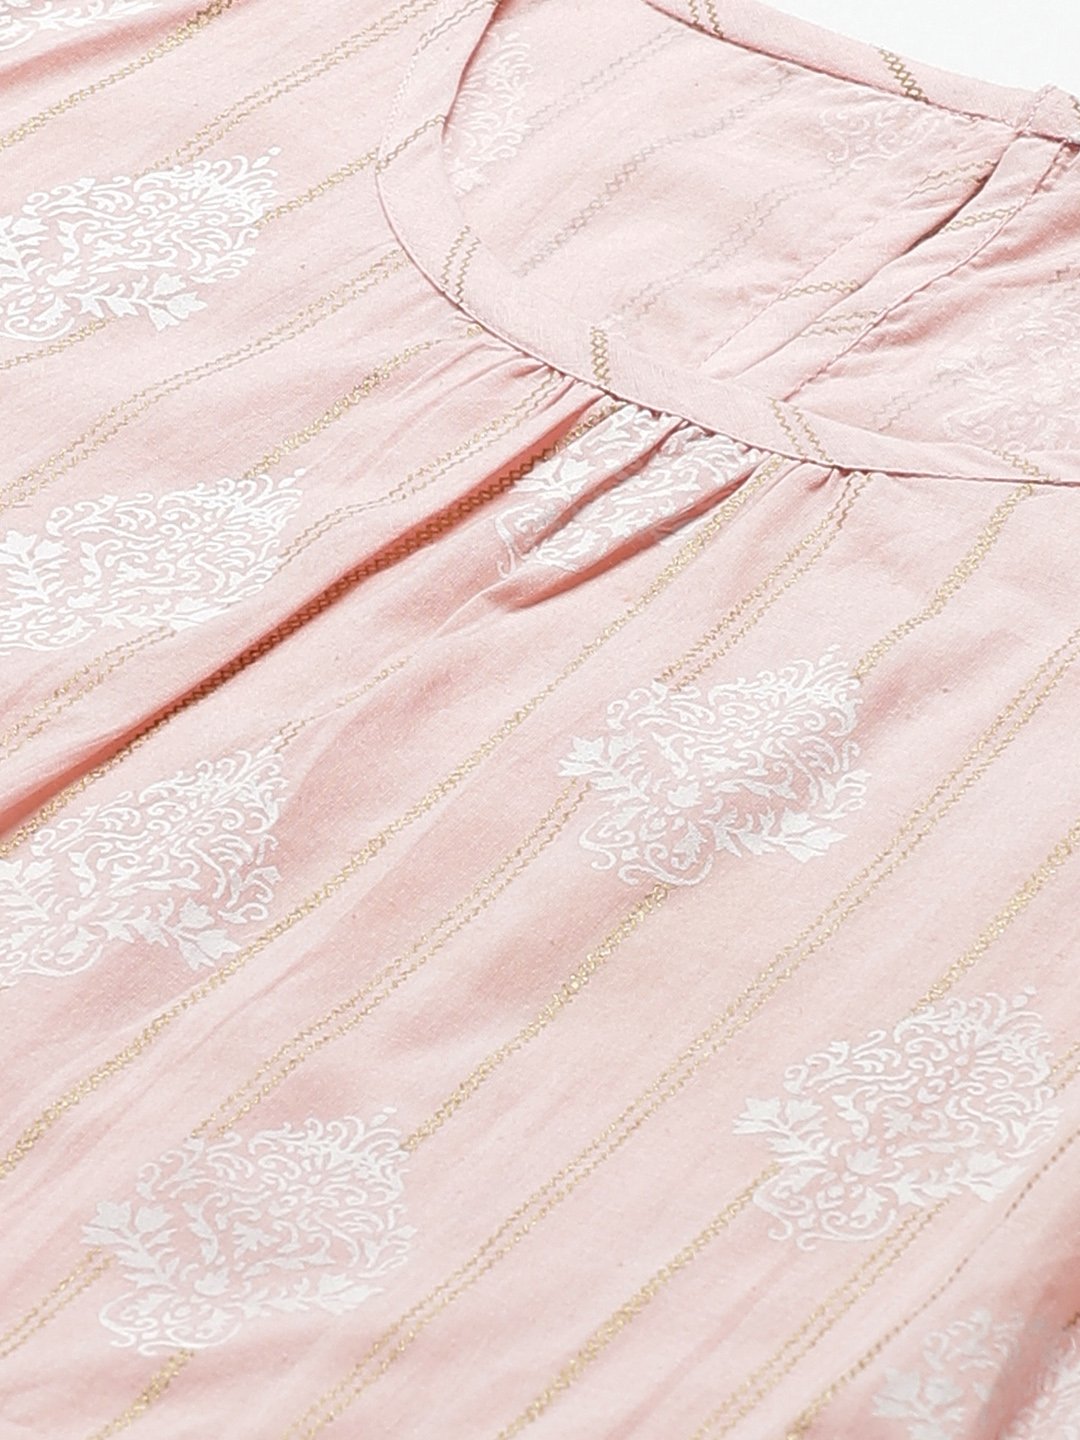 Women's Pink Ethnic Motifs Printed Round Neck Cotton A-Line Dress - Nayo Clothing